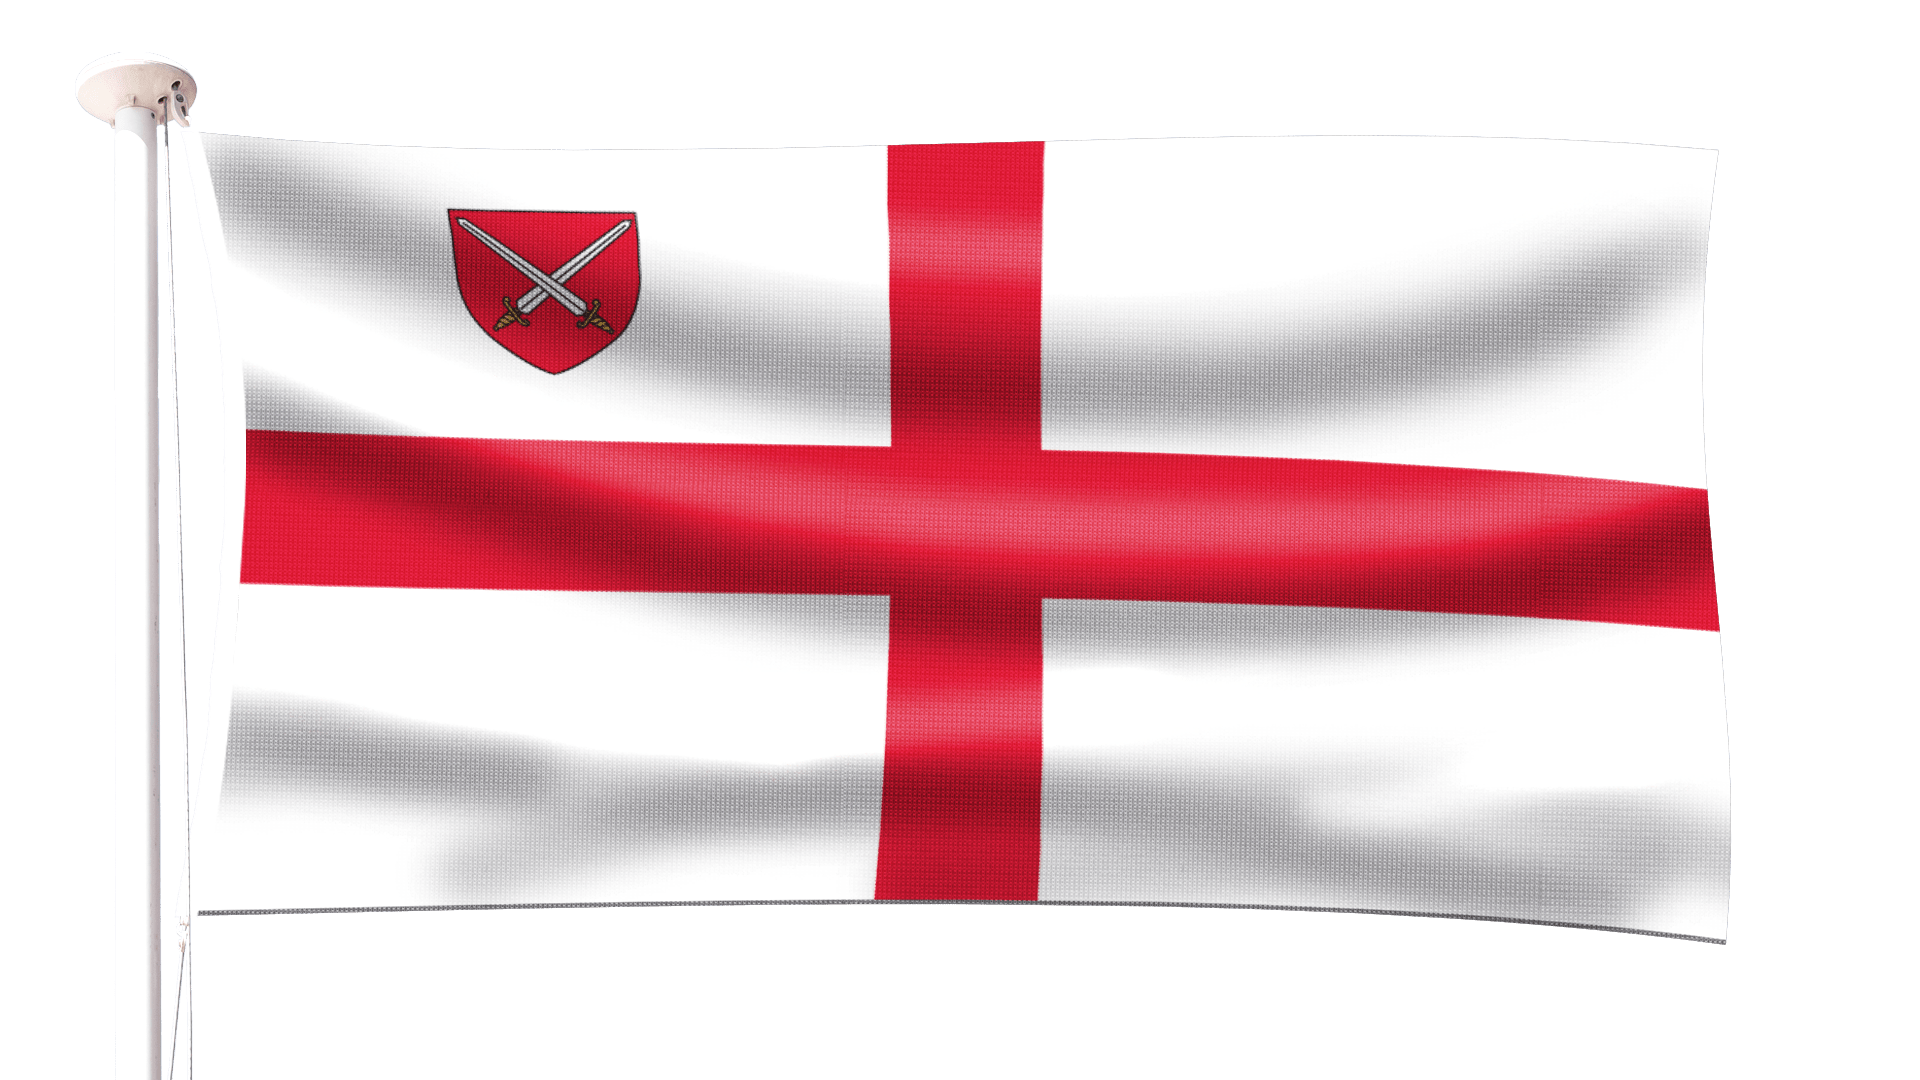 London Diocese Flag - Hampshire Flag Company